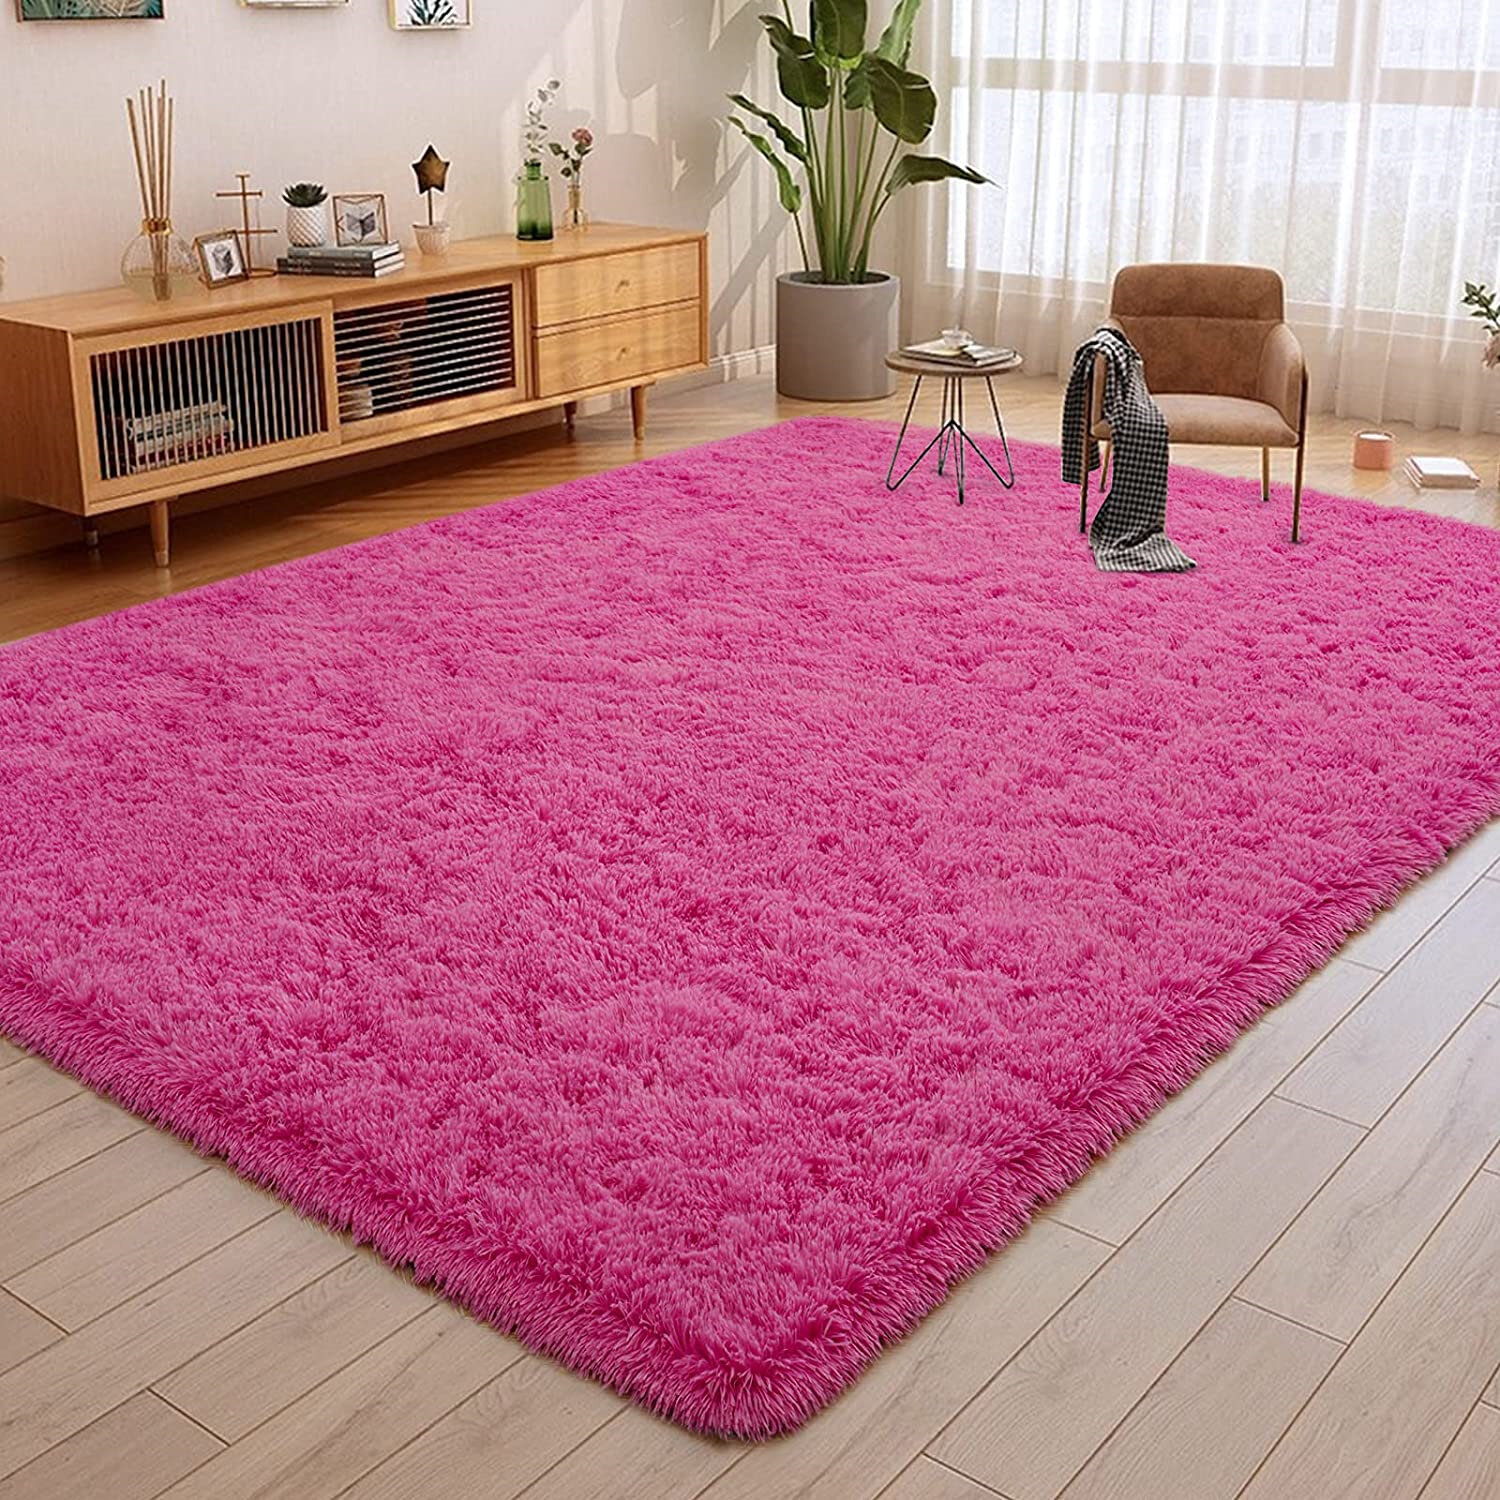 Rugs Anti-Slip SHAGGY RUG Soft Carpet Mat Living Room Floor Bedroom Decor Home 